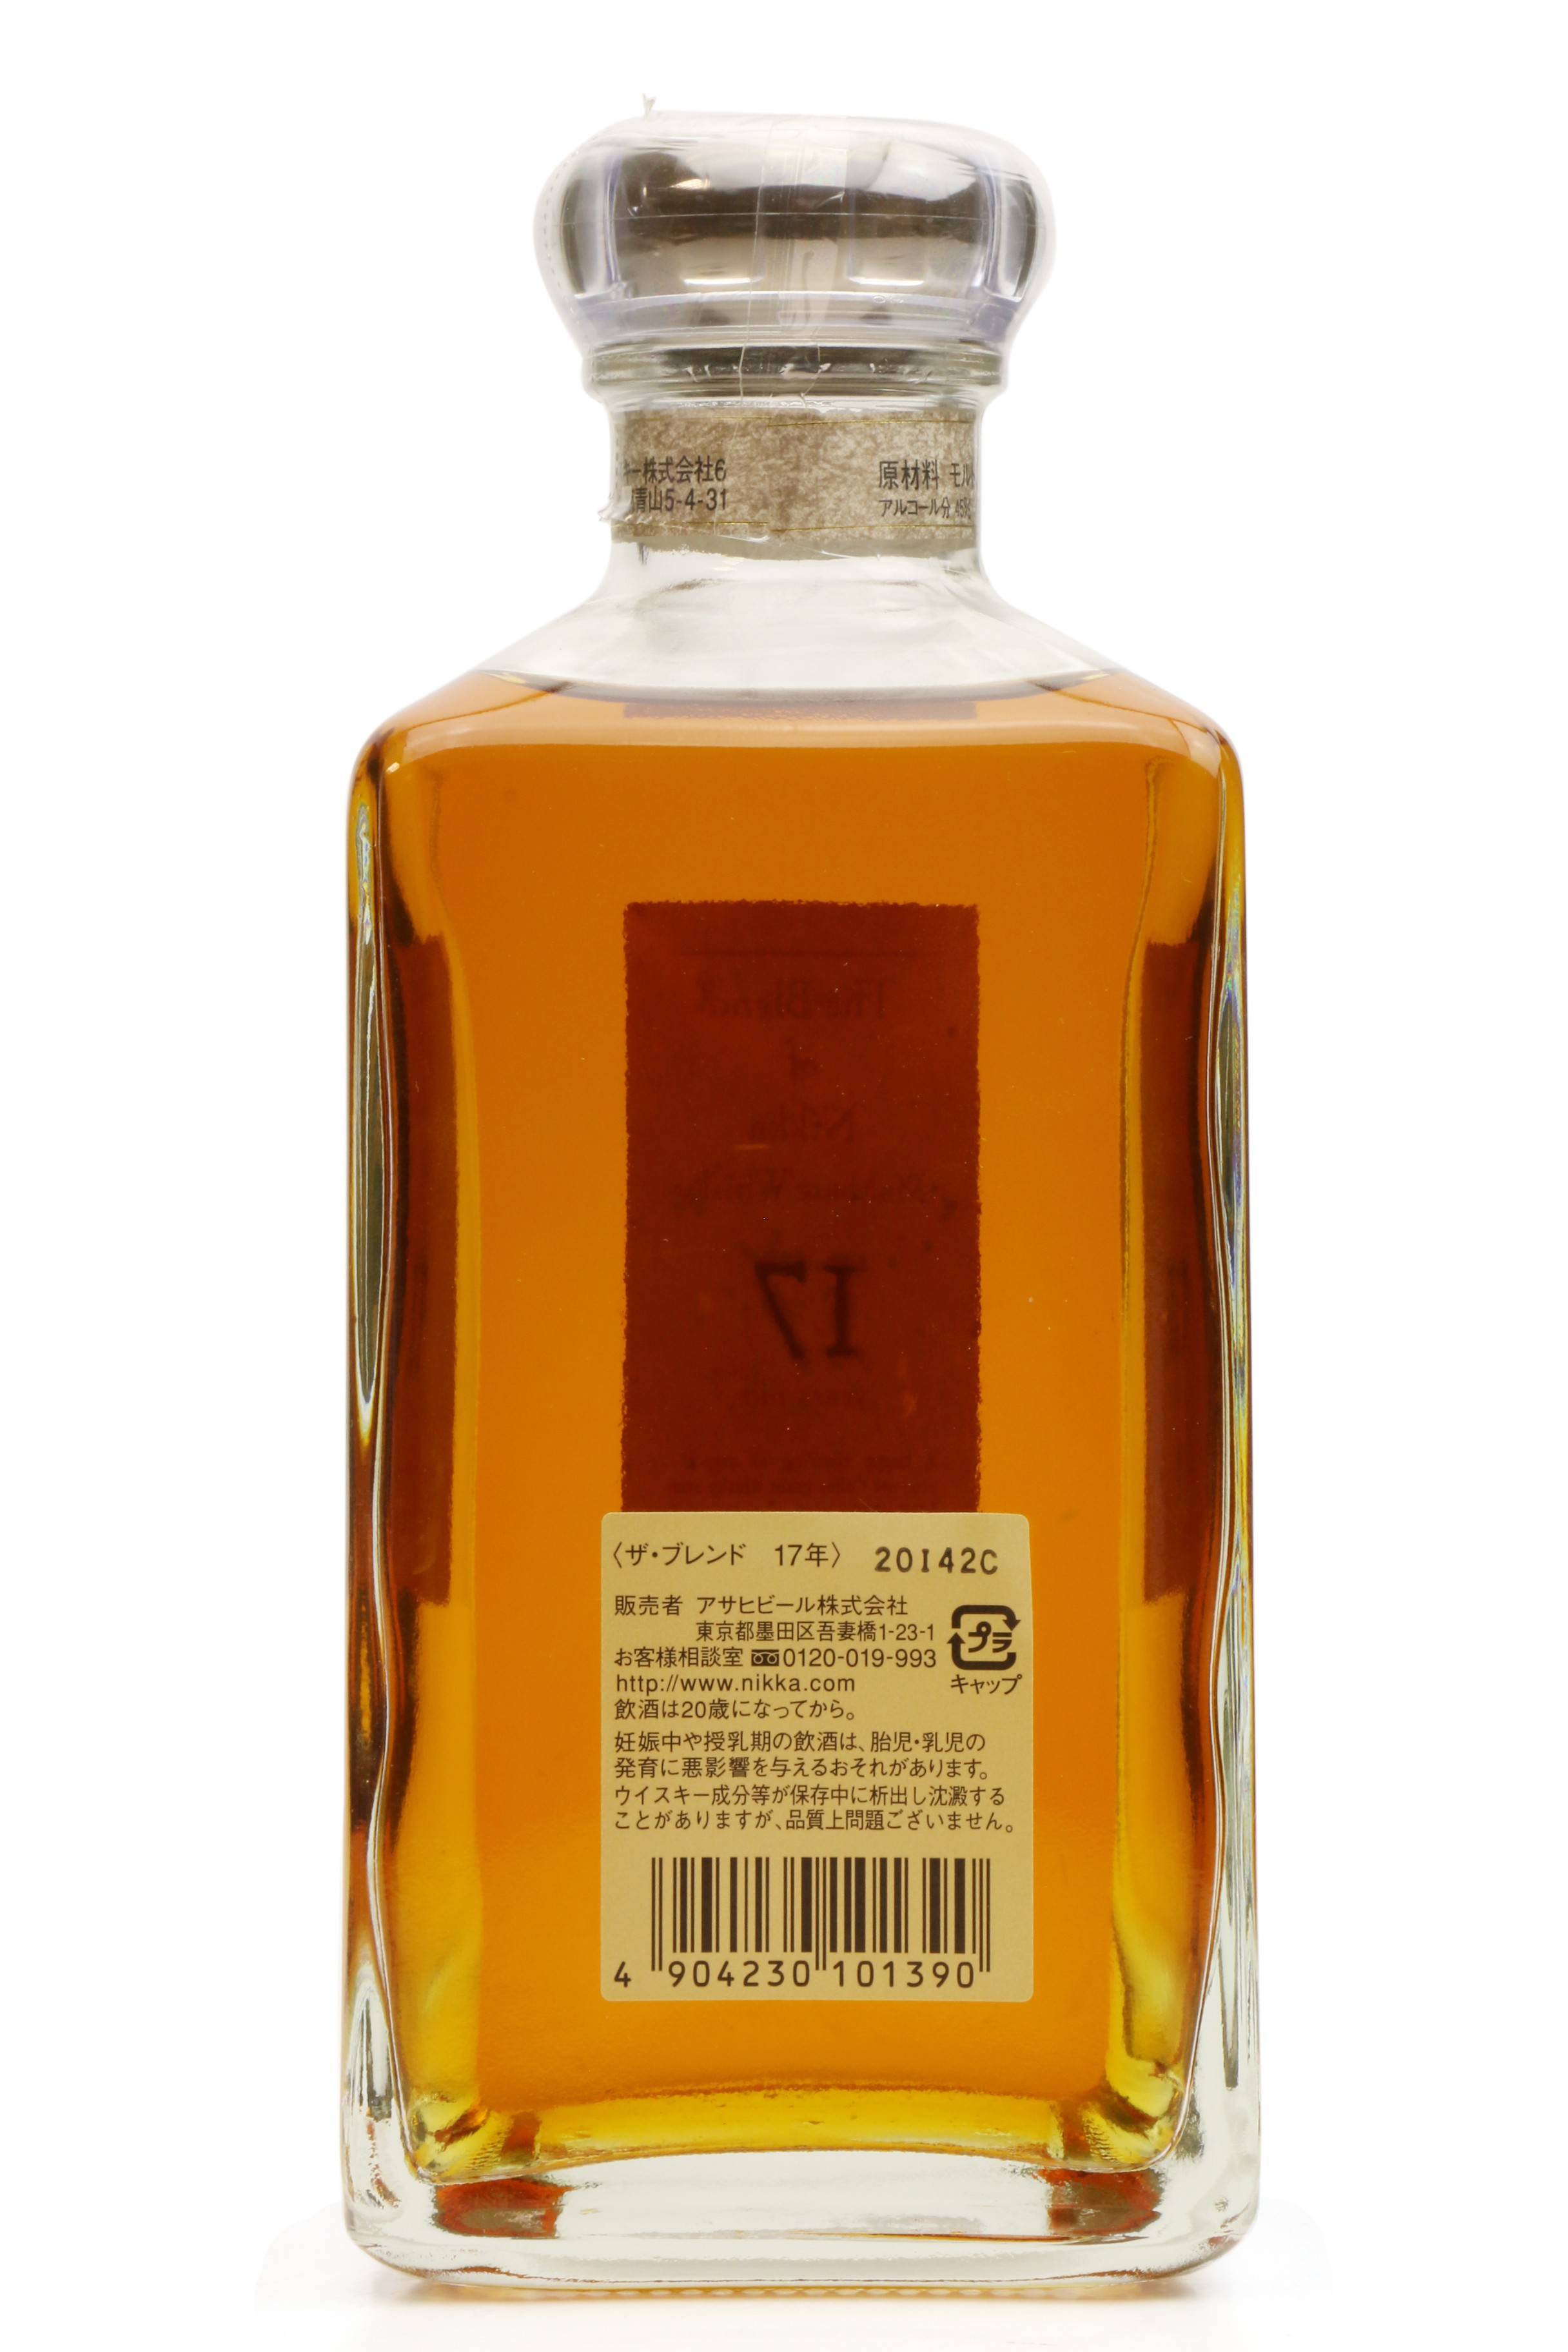 The Blend of Nikka Maltbase Whisky 17年-